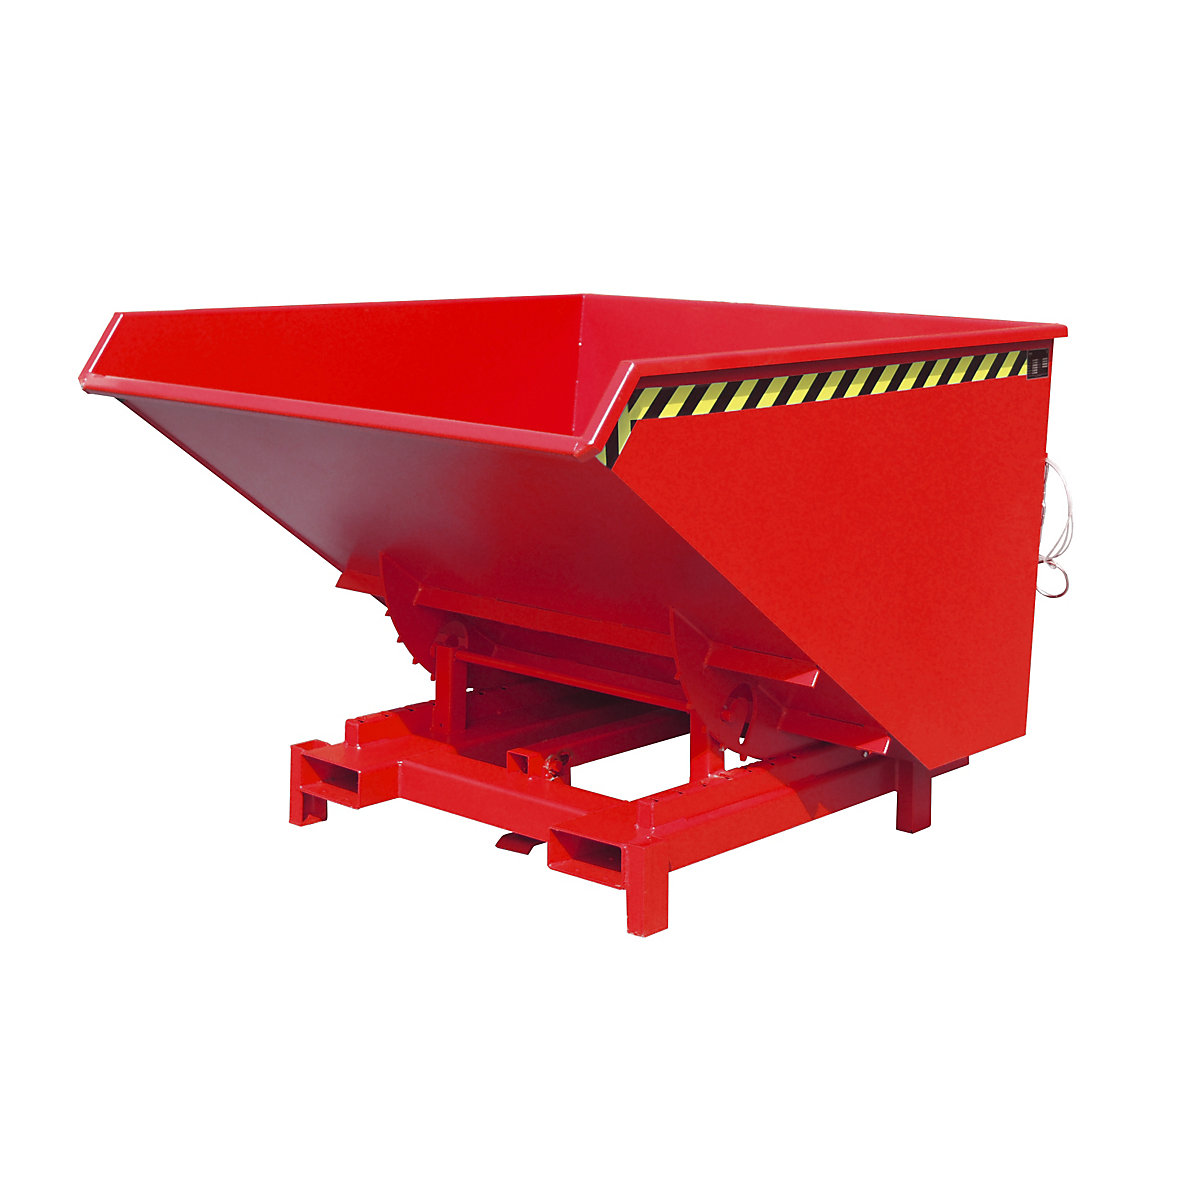 Cassoni ribaltabili per carichi pesanti – eurokraft pro, capacità 1,7 m³, portata 4000 kg, rosso RAL 3000-10